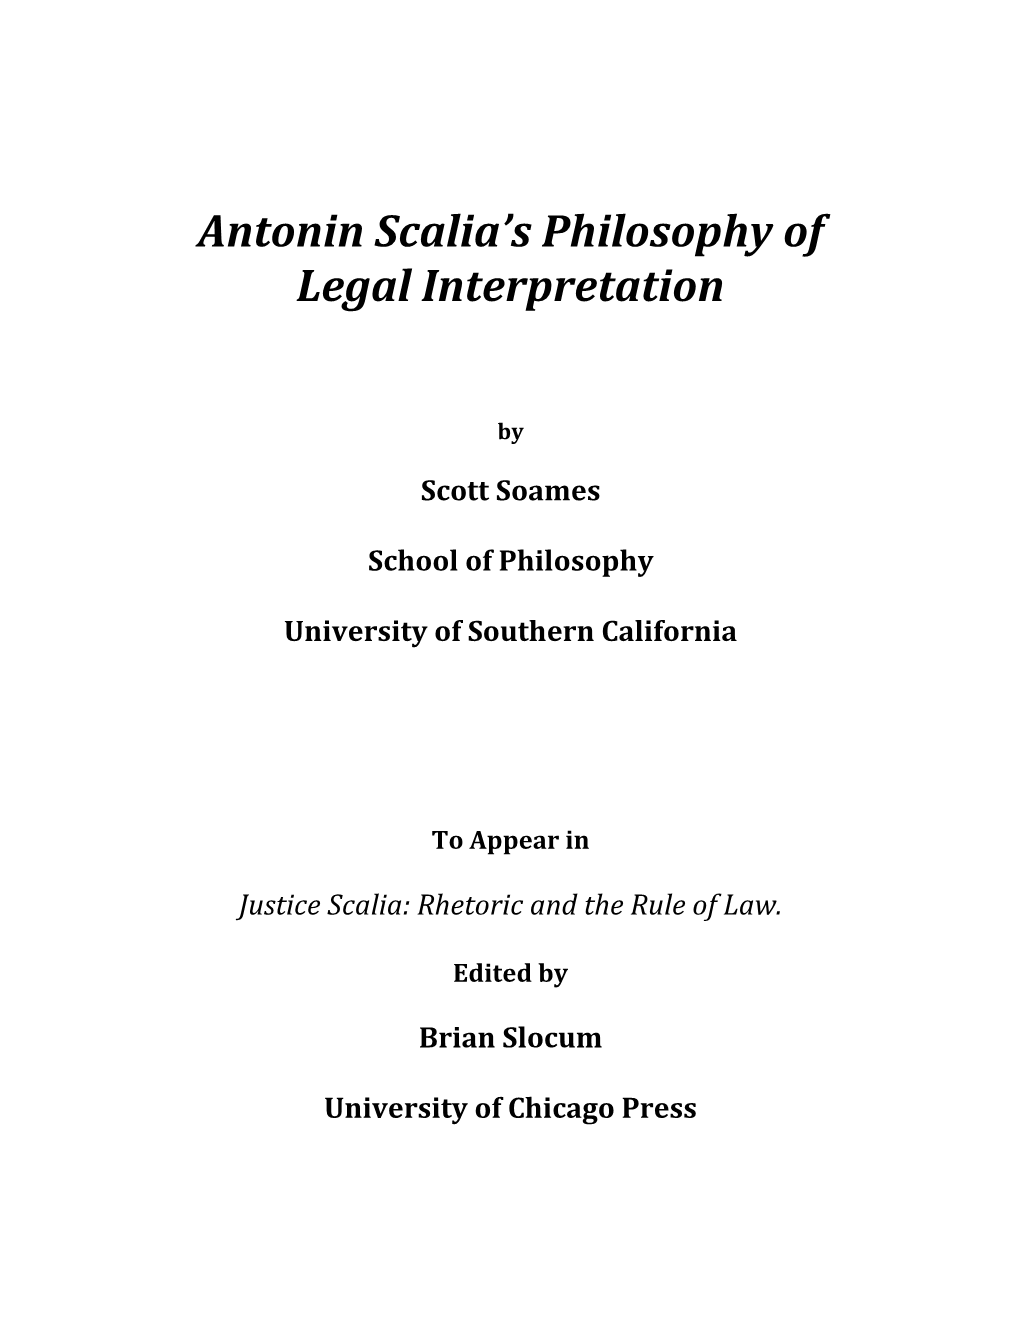 Antonin Scalia's Philosophy of Legal Interpretation